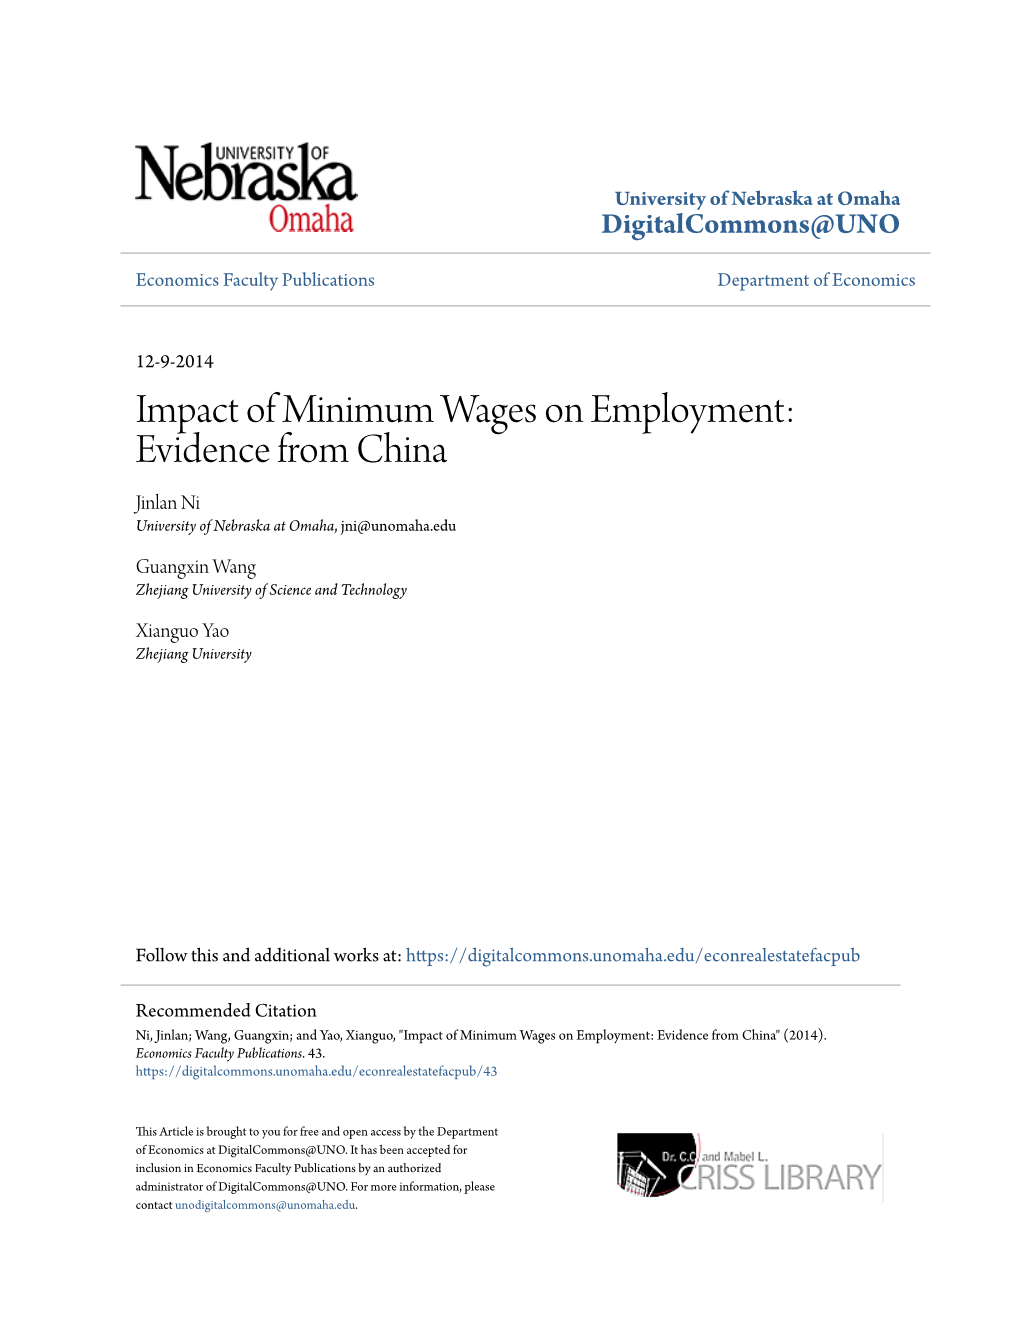 Impact of Minimum Wages on Employment: Evidence from China Jinlan Ni University of Nebraska at Omaha, Jni@Unomaha.Edu